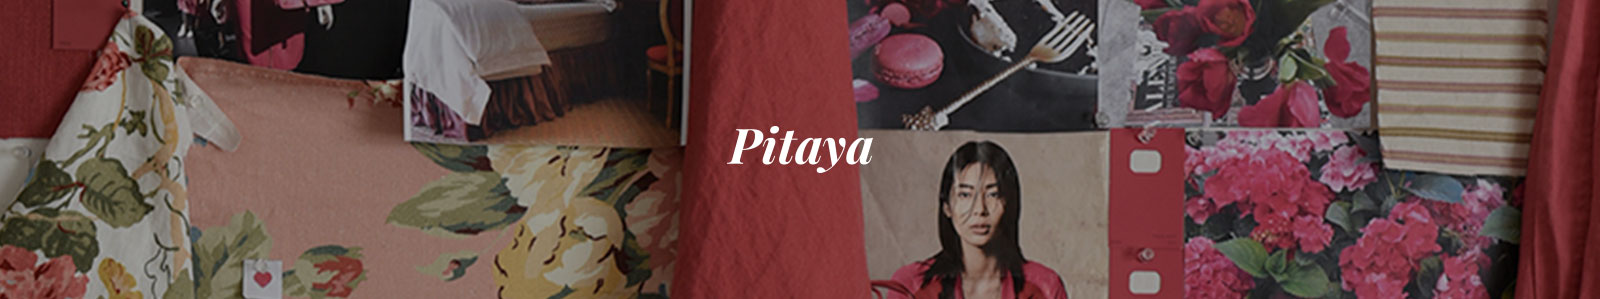 banner com a logo pitaya